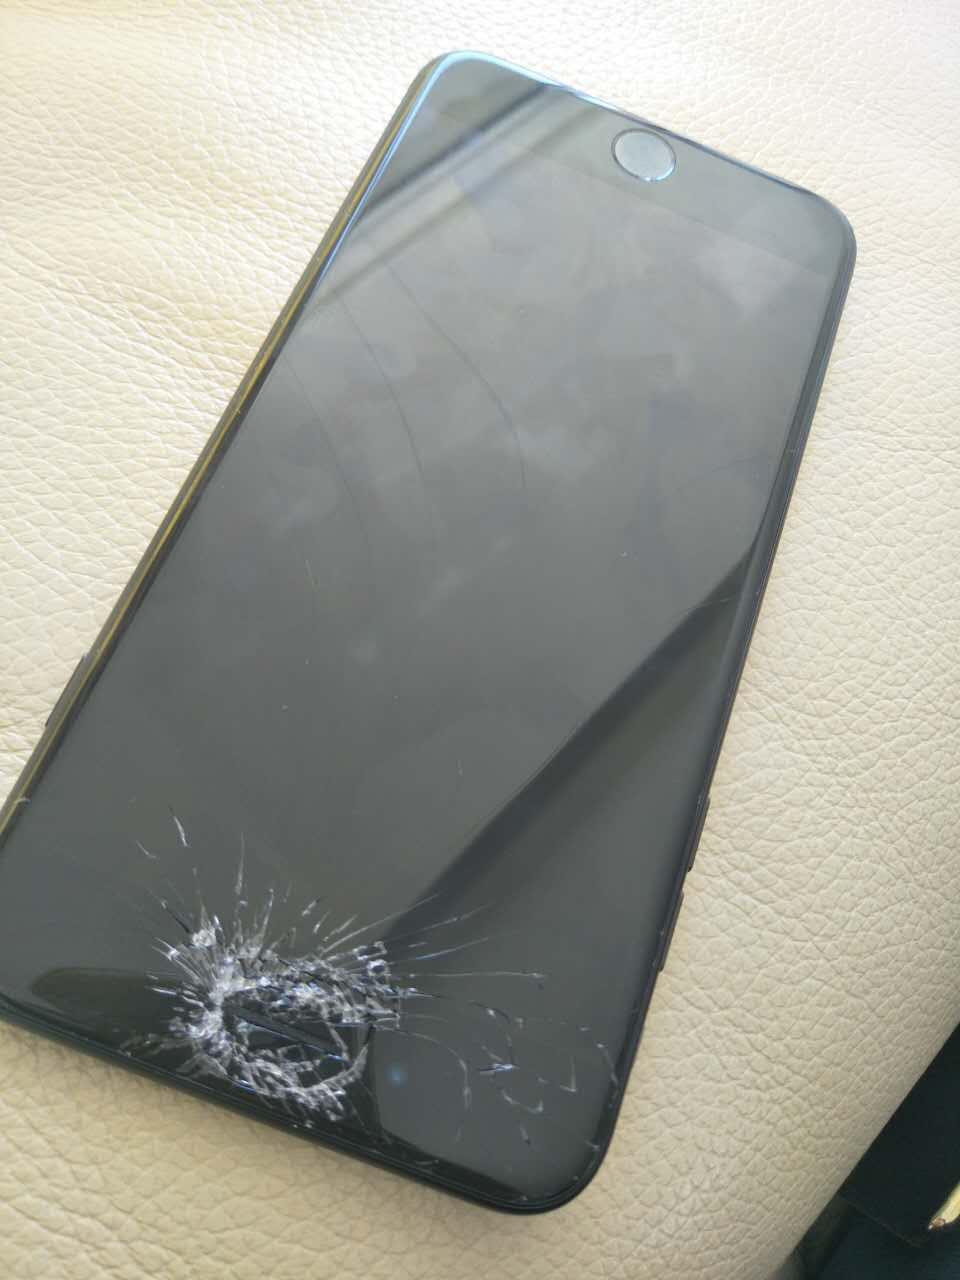 iphone7plus 屏幕碎了修在多少钱左右 值得修吗 有图?